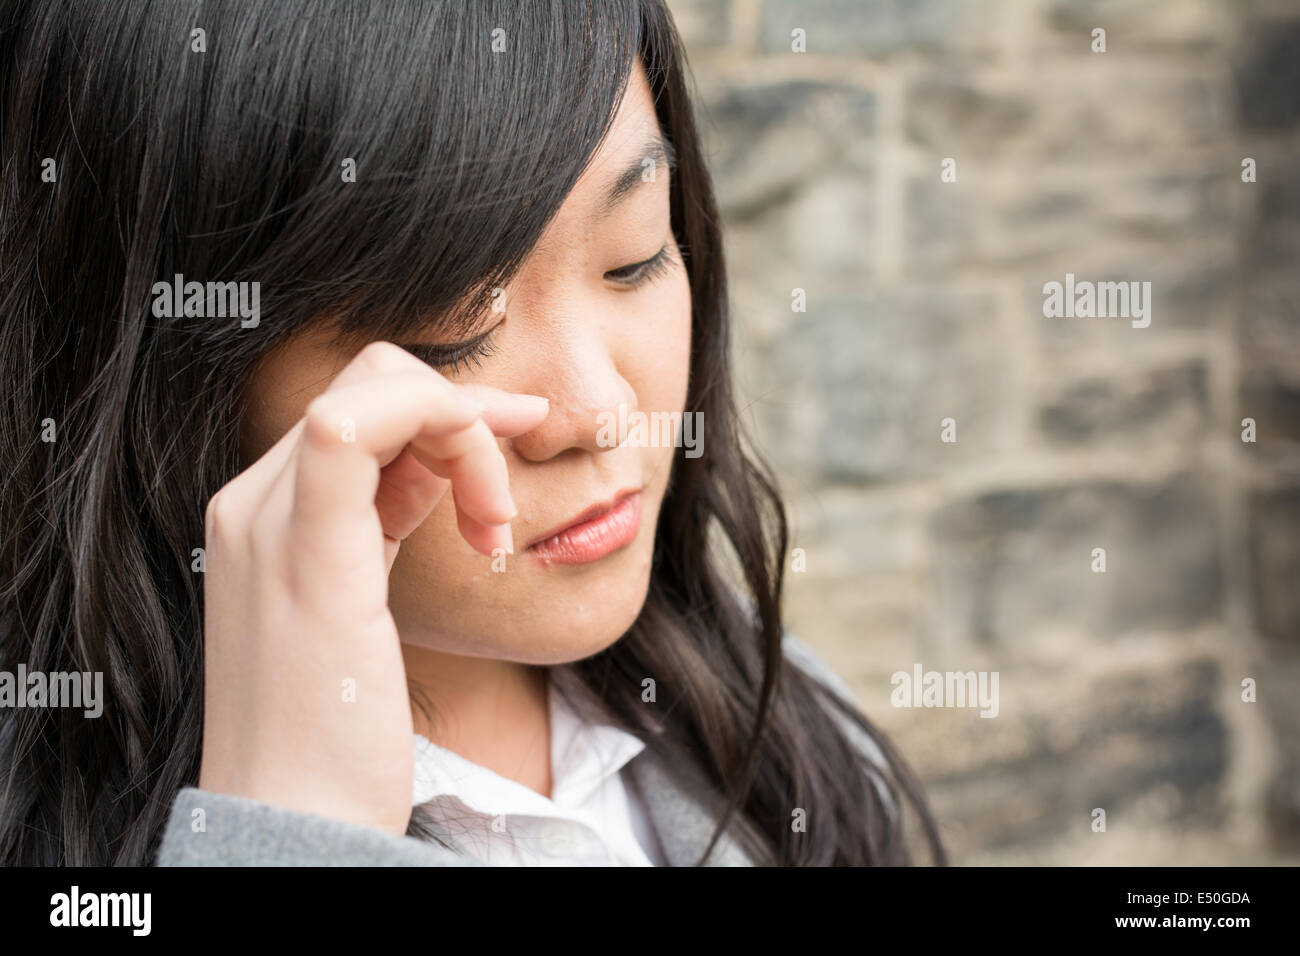 Sad woman by a stone wall Stock Photo